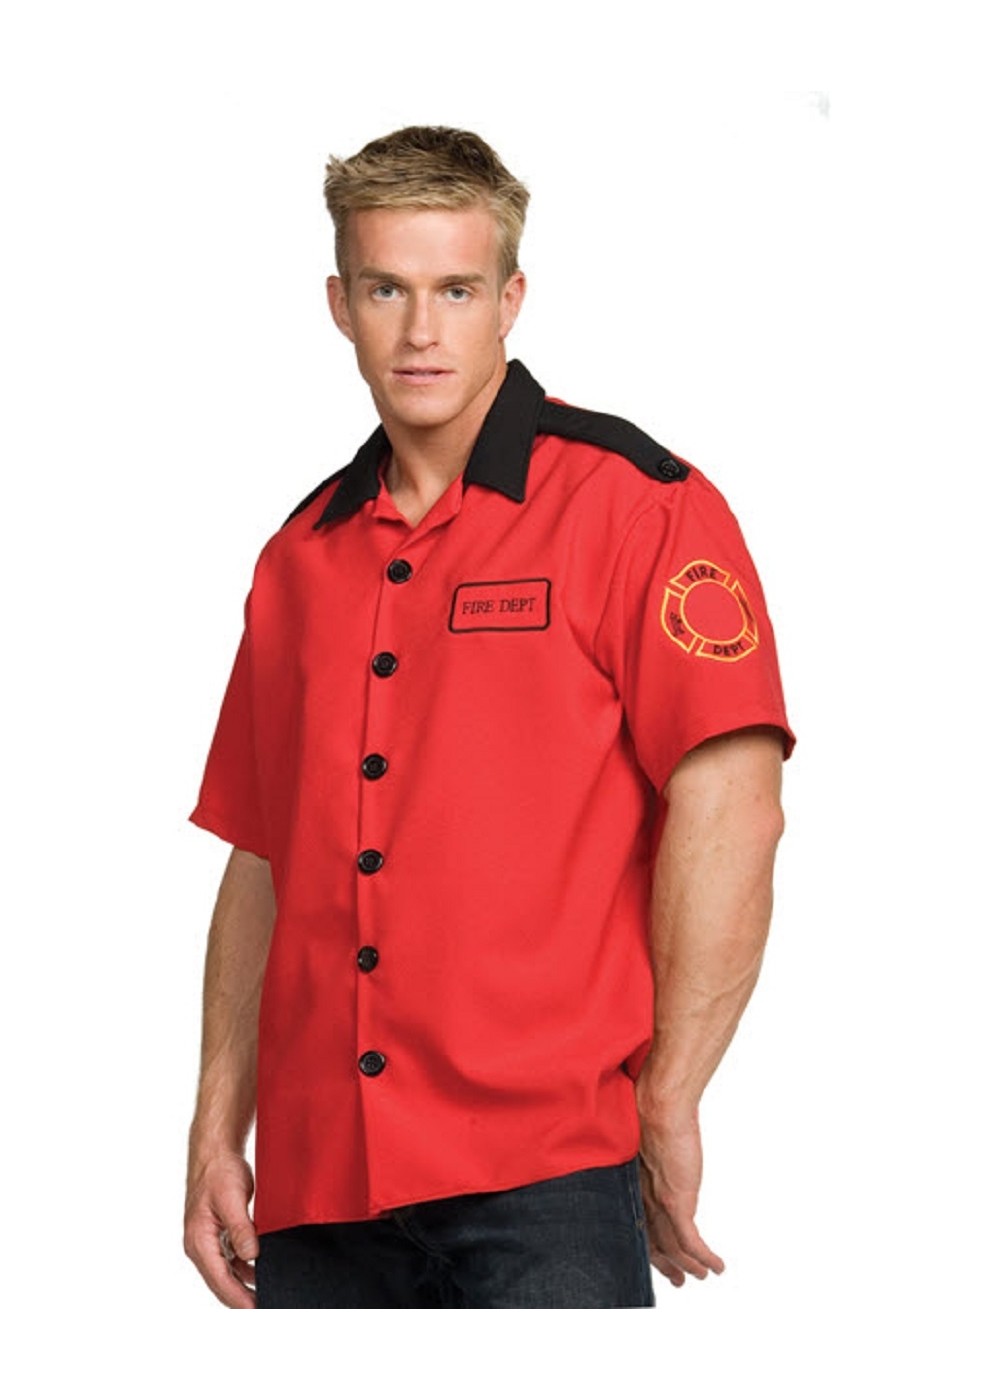  Fireman Shirt Costume